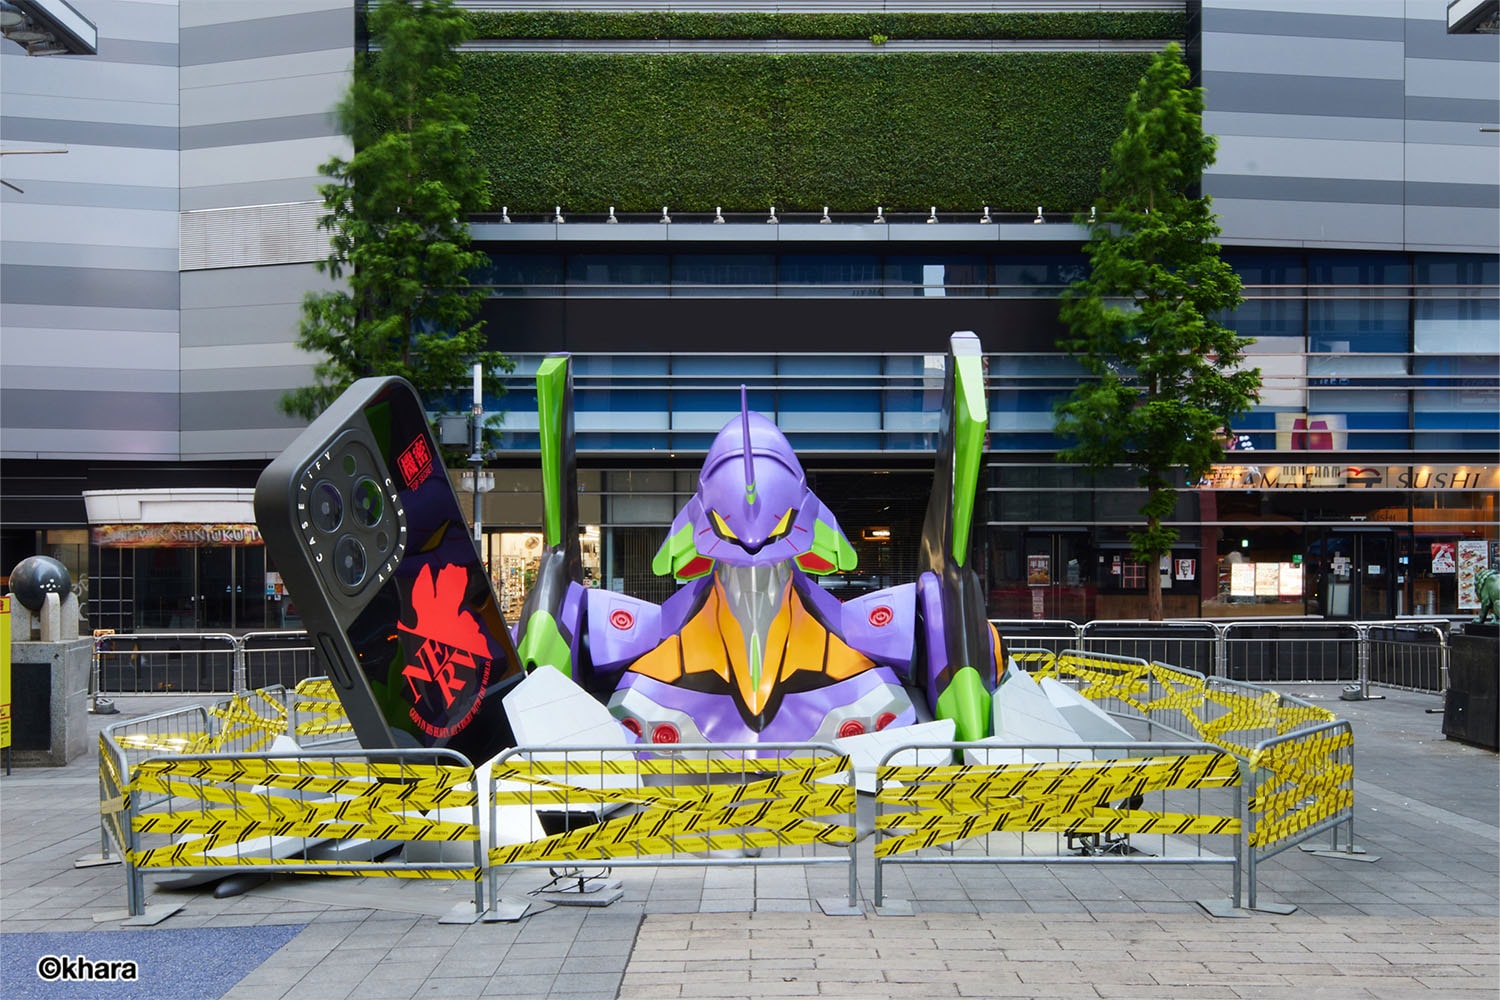 CASETiFY Evangelion display in Tokyo Shinjuku district in Japan.